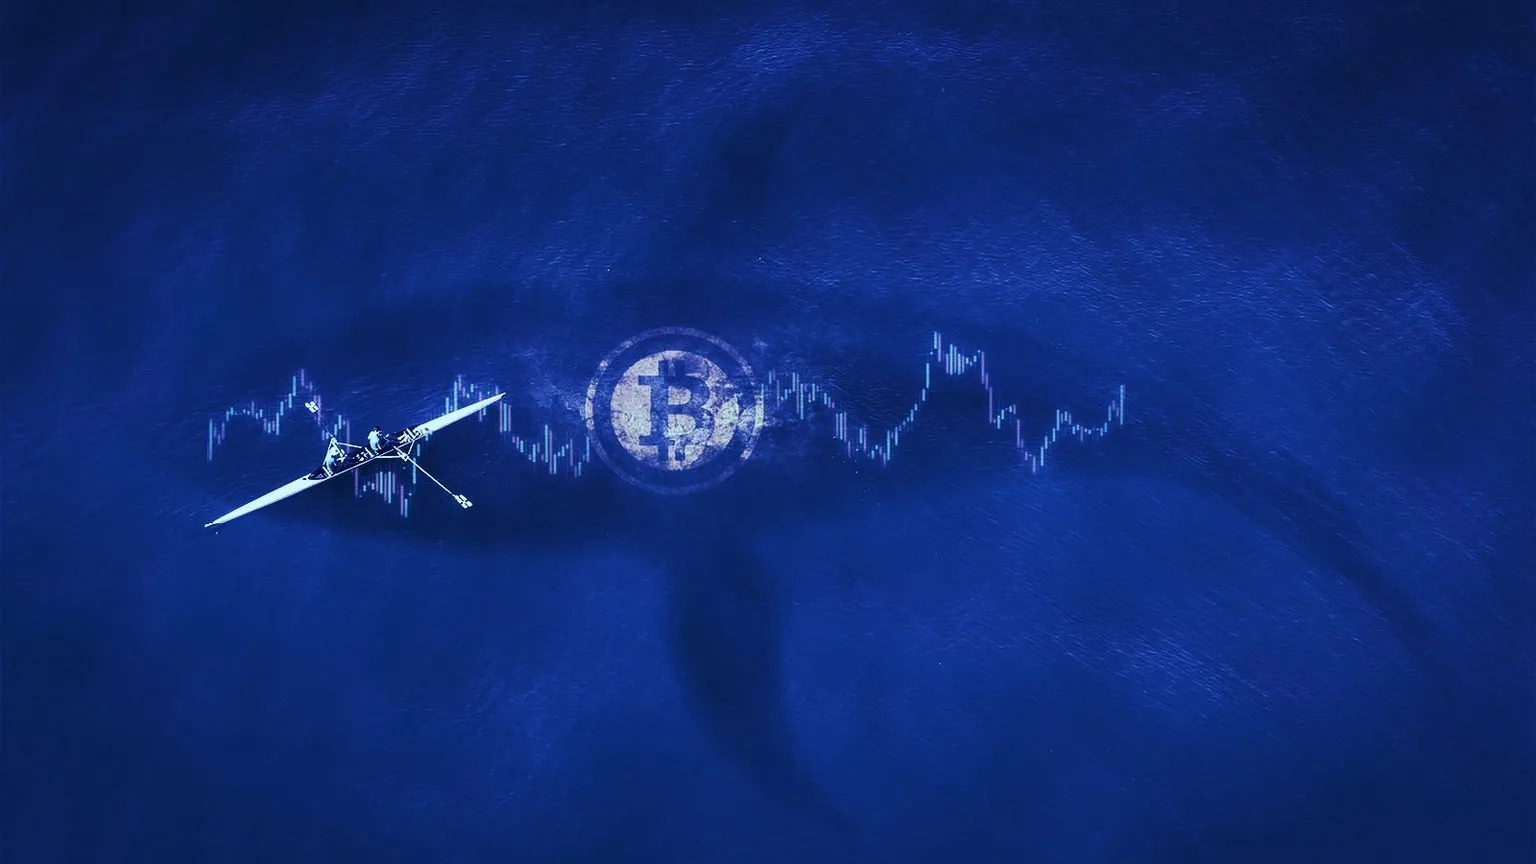 Ballenas de Bitcoin. IMAGEN: Shutterstock